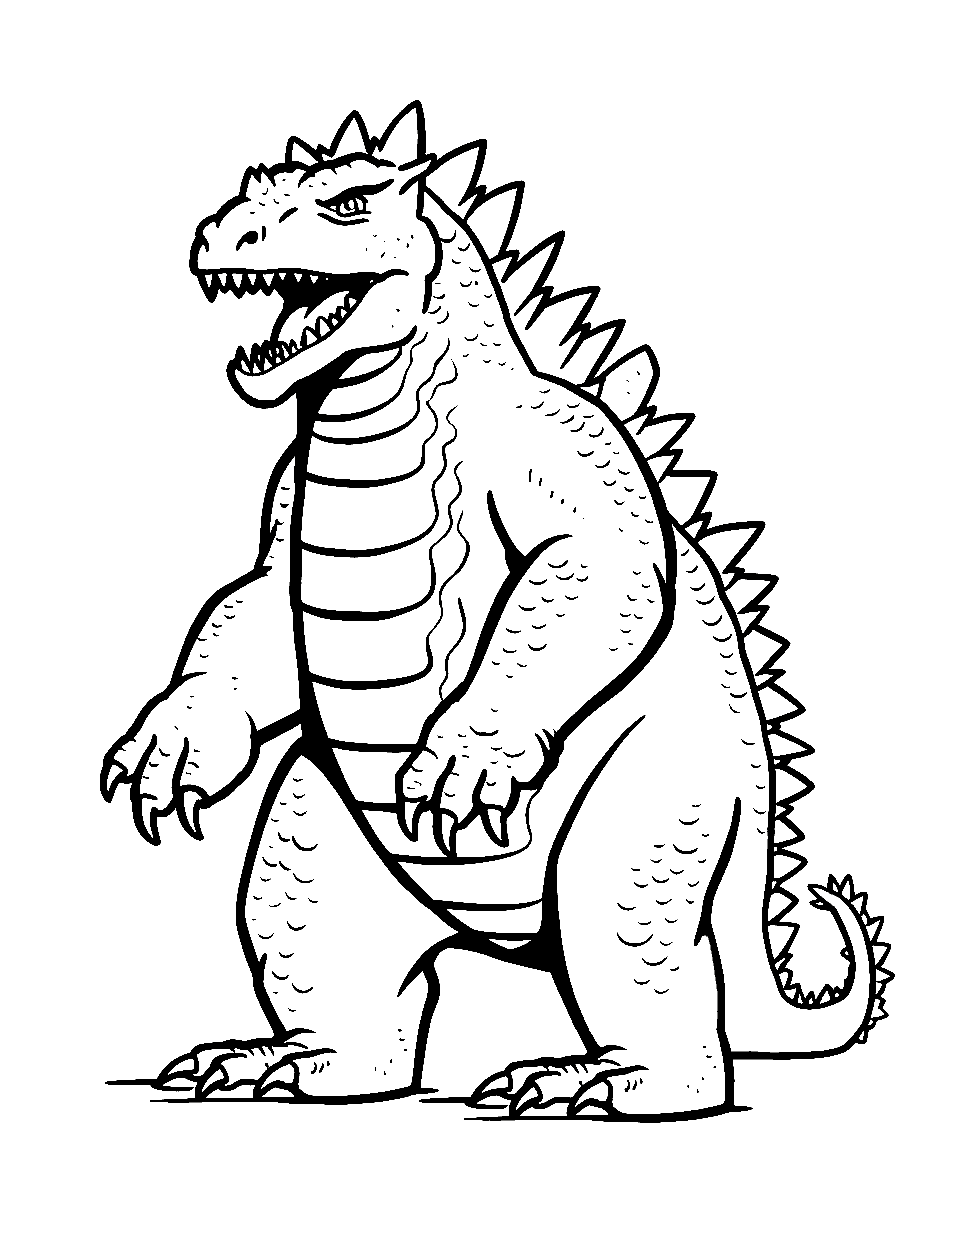 Godzilla 2014 Sketch by KyeroDiNelma2014 on DeviantArt